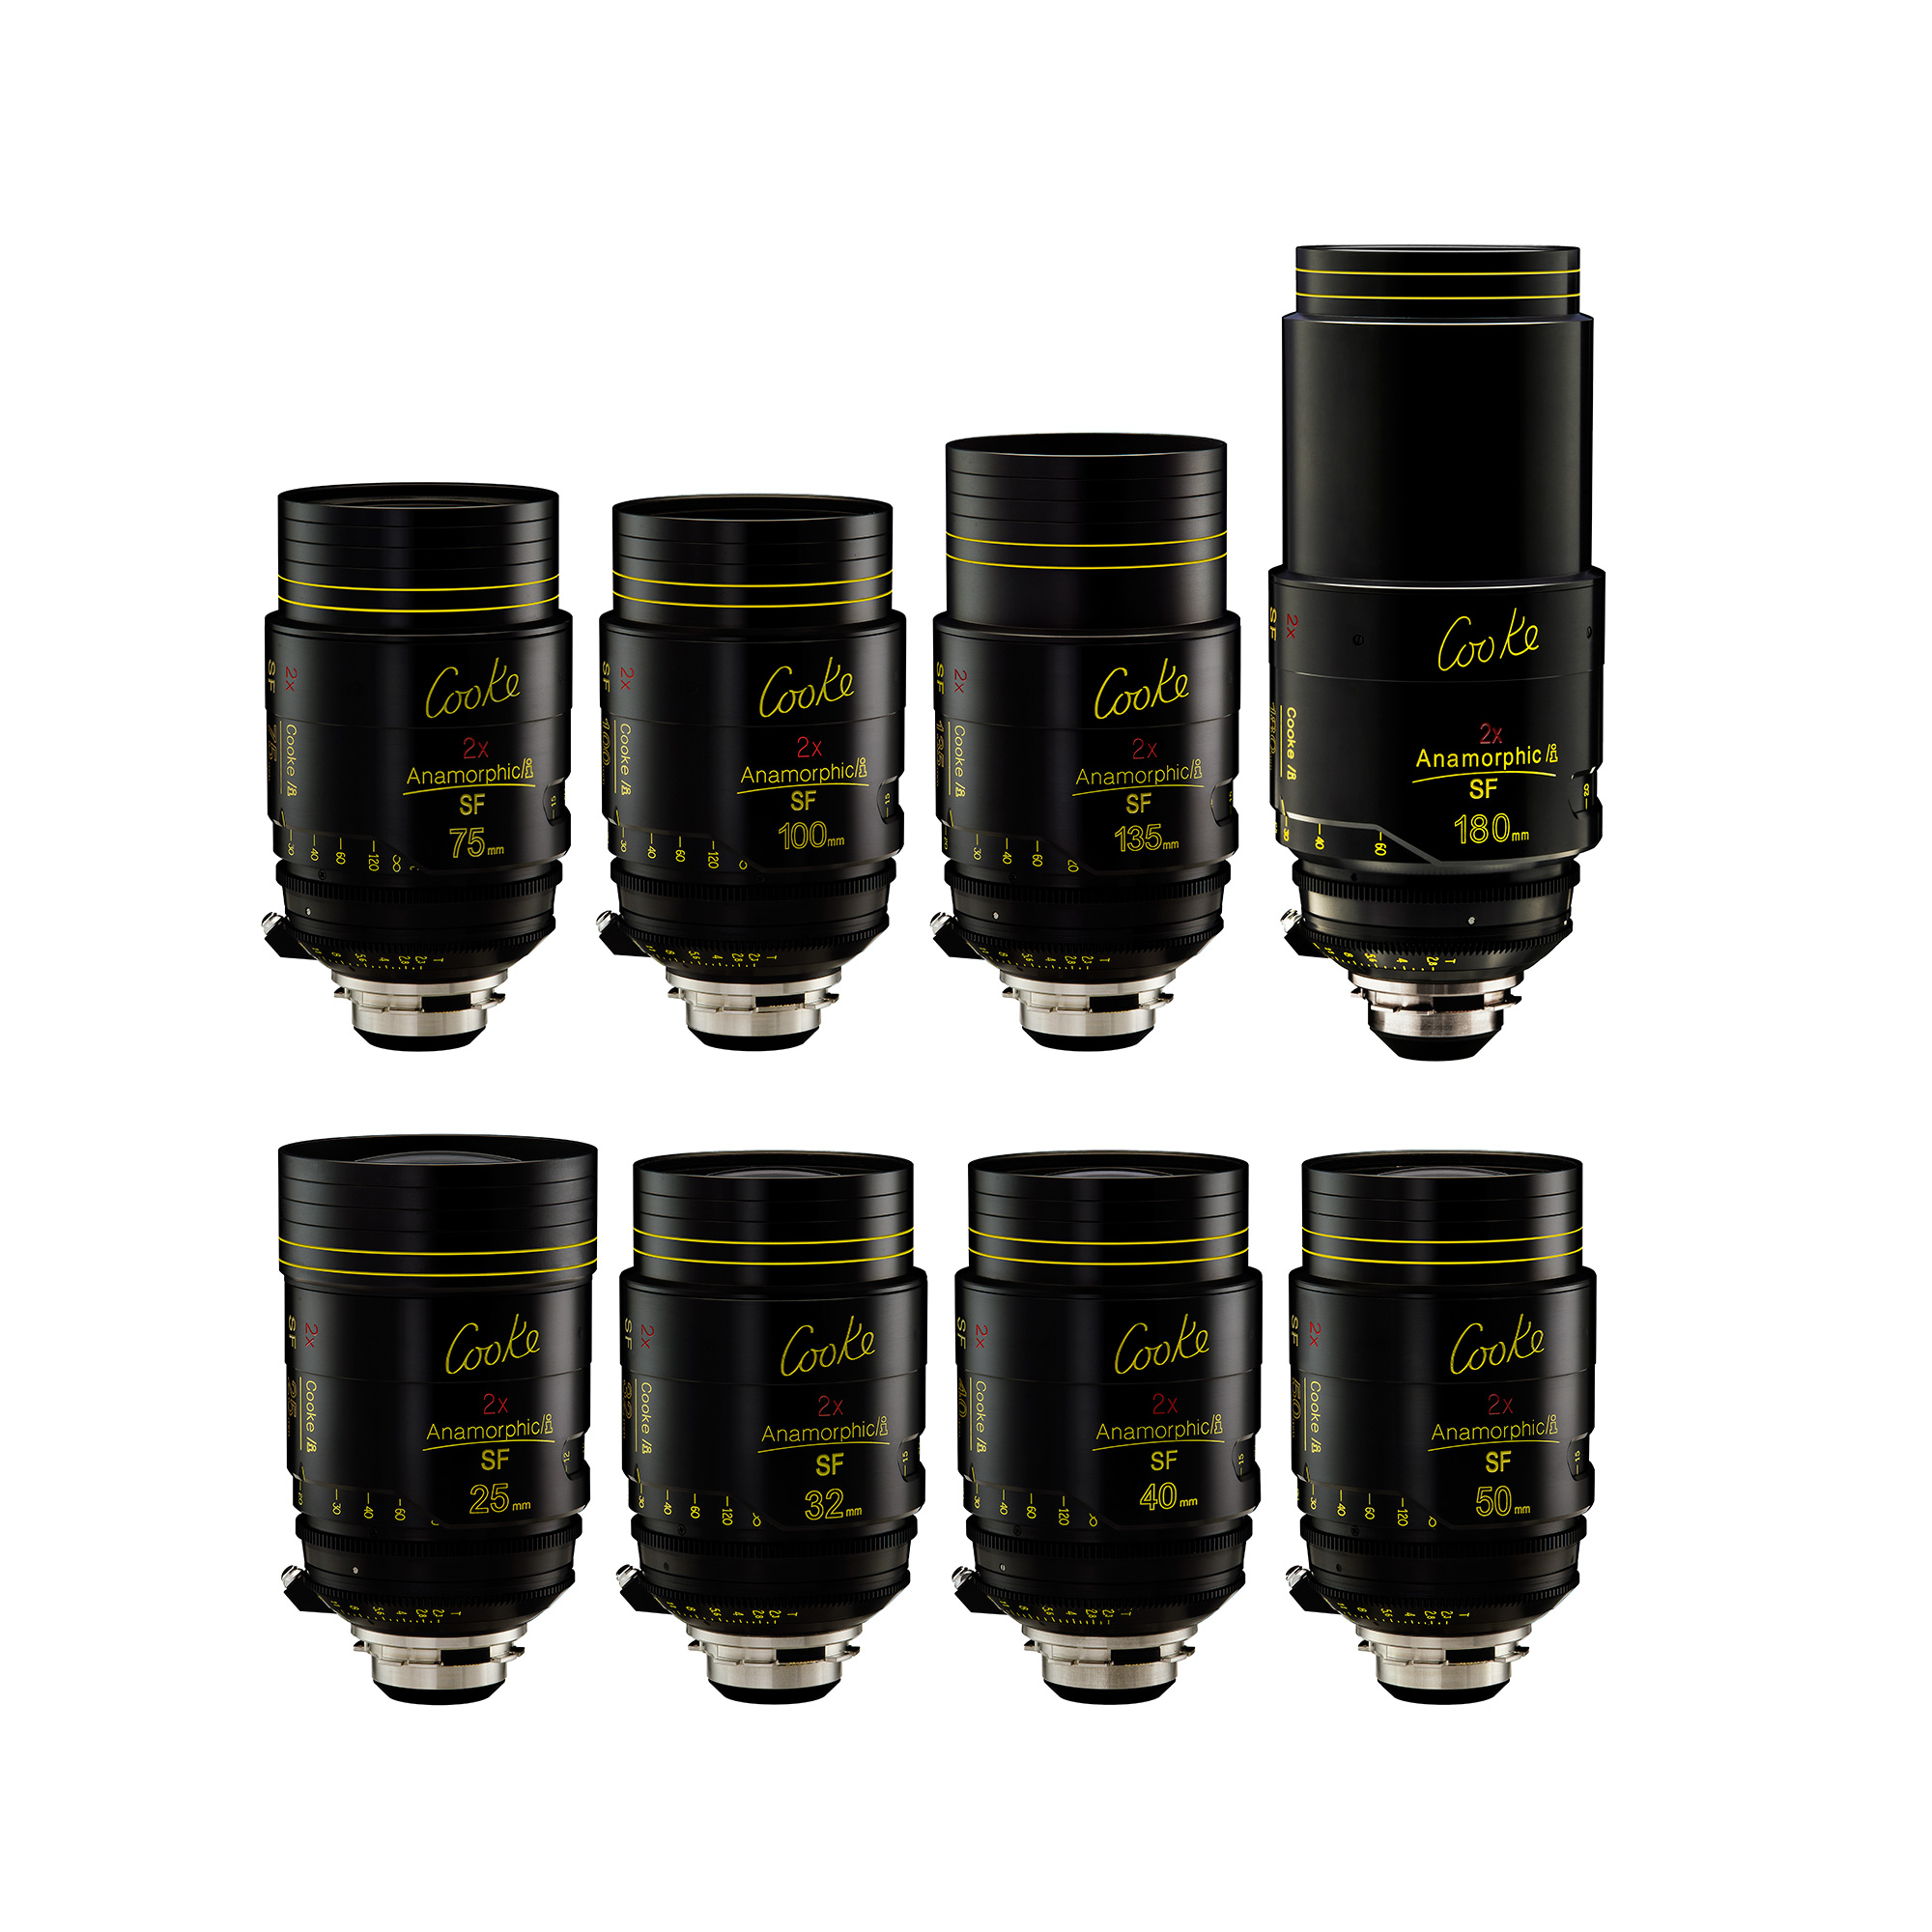 Cooke Anamorphic/i S35 Lens Series